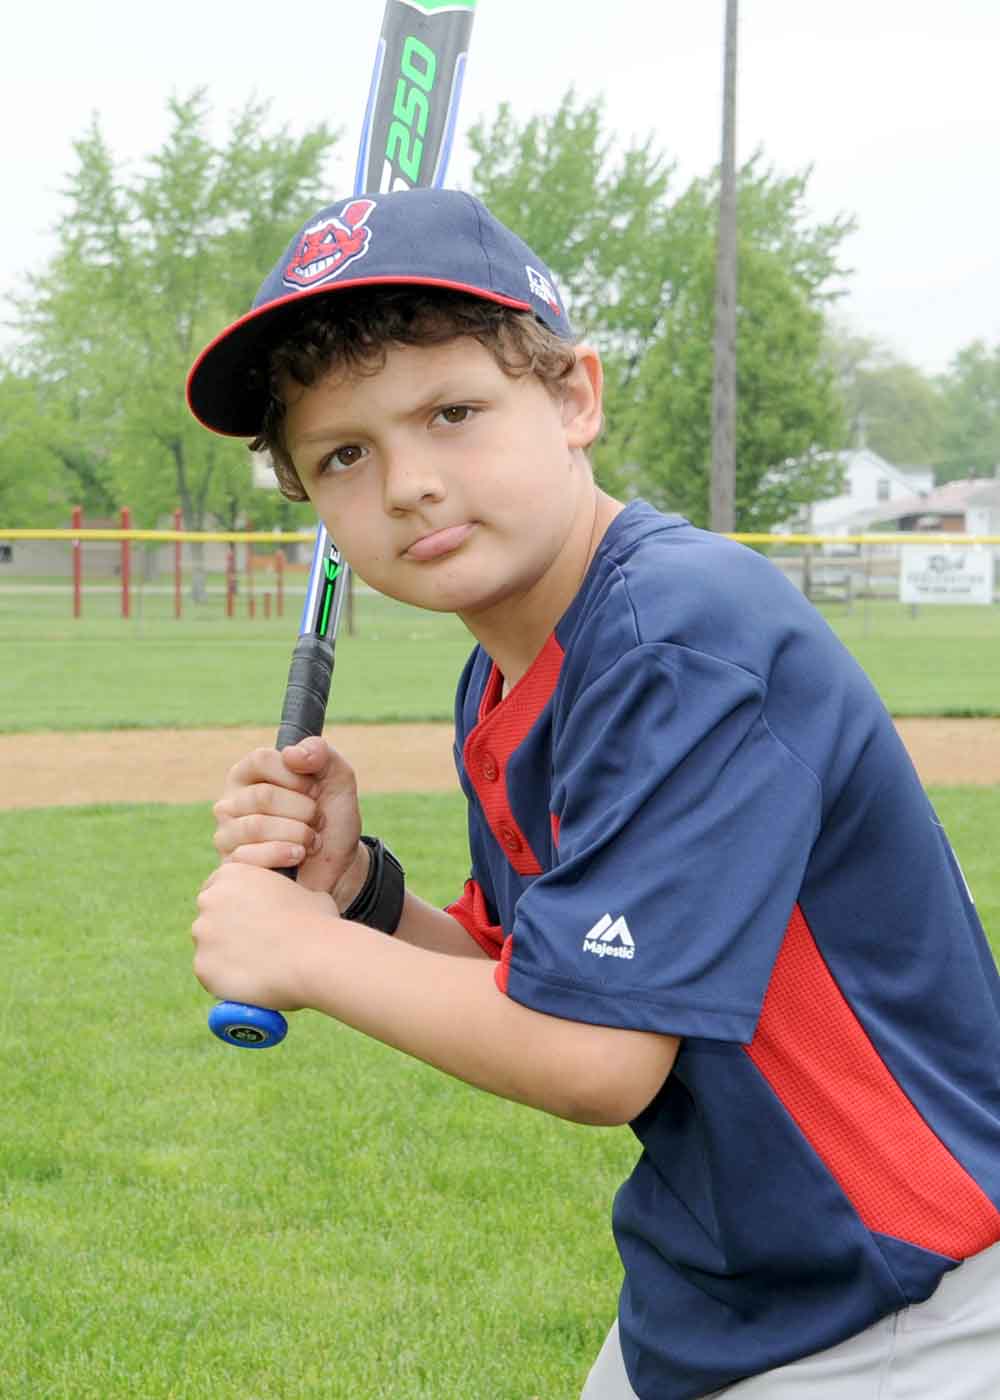 boy baseball player posing with bat